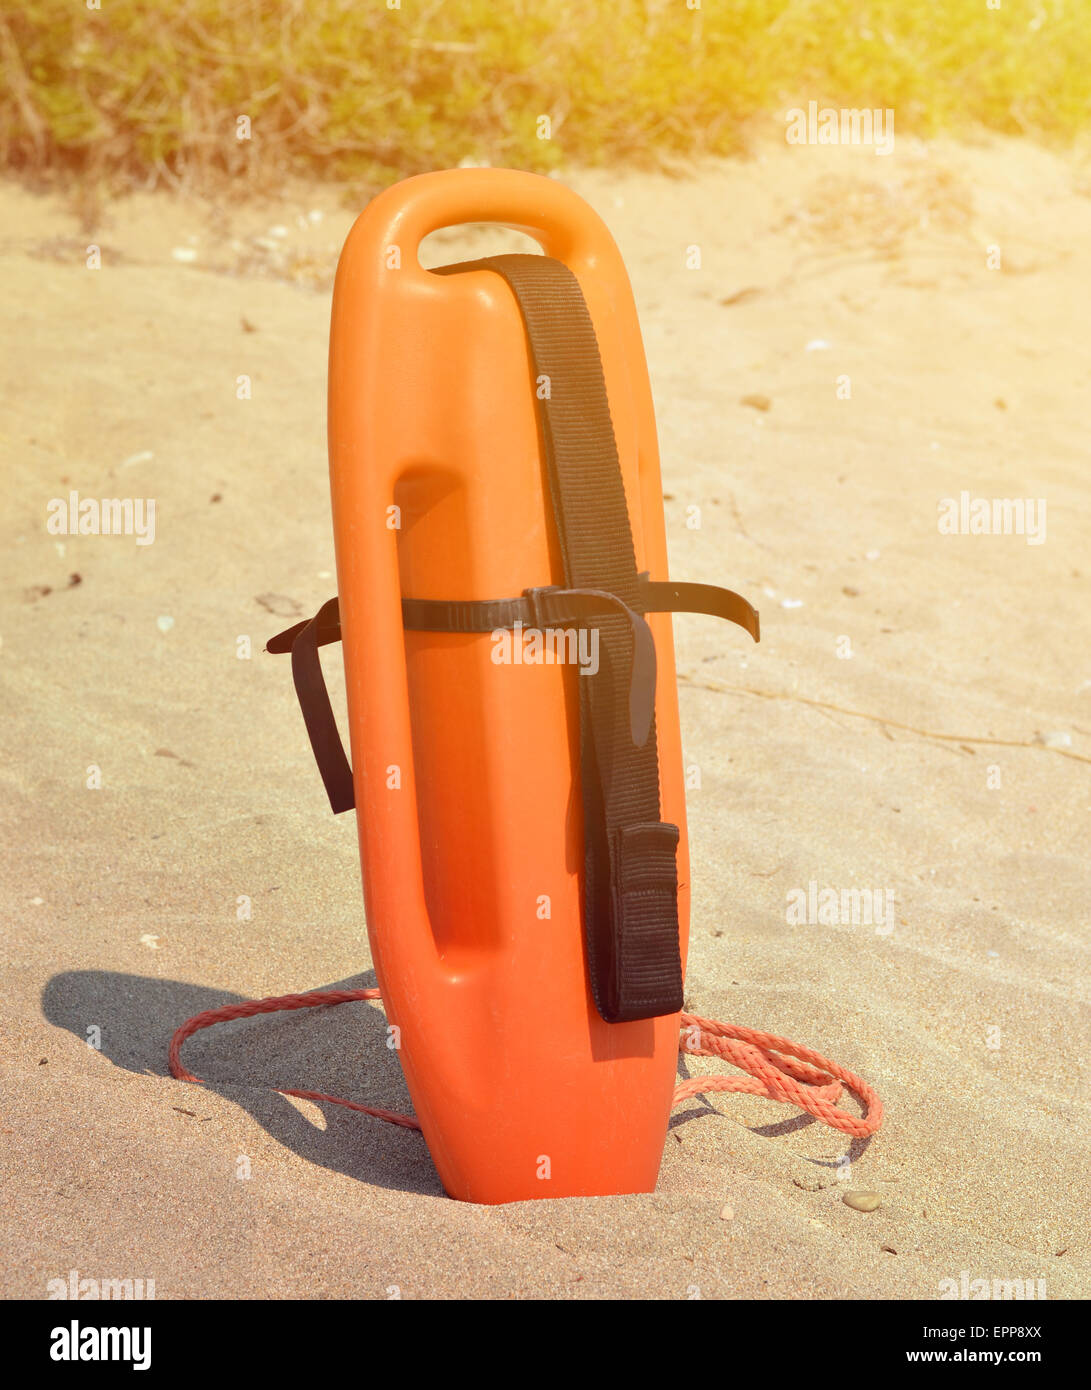 Torpedo lifeguard hi-res stock photography and images - Alamy